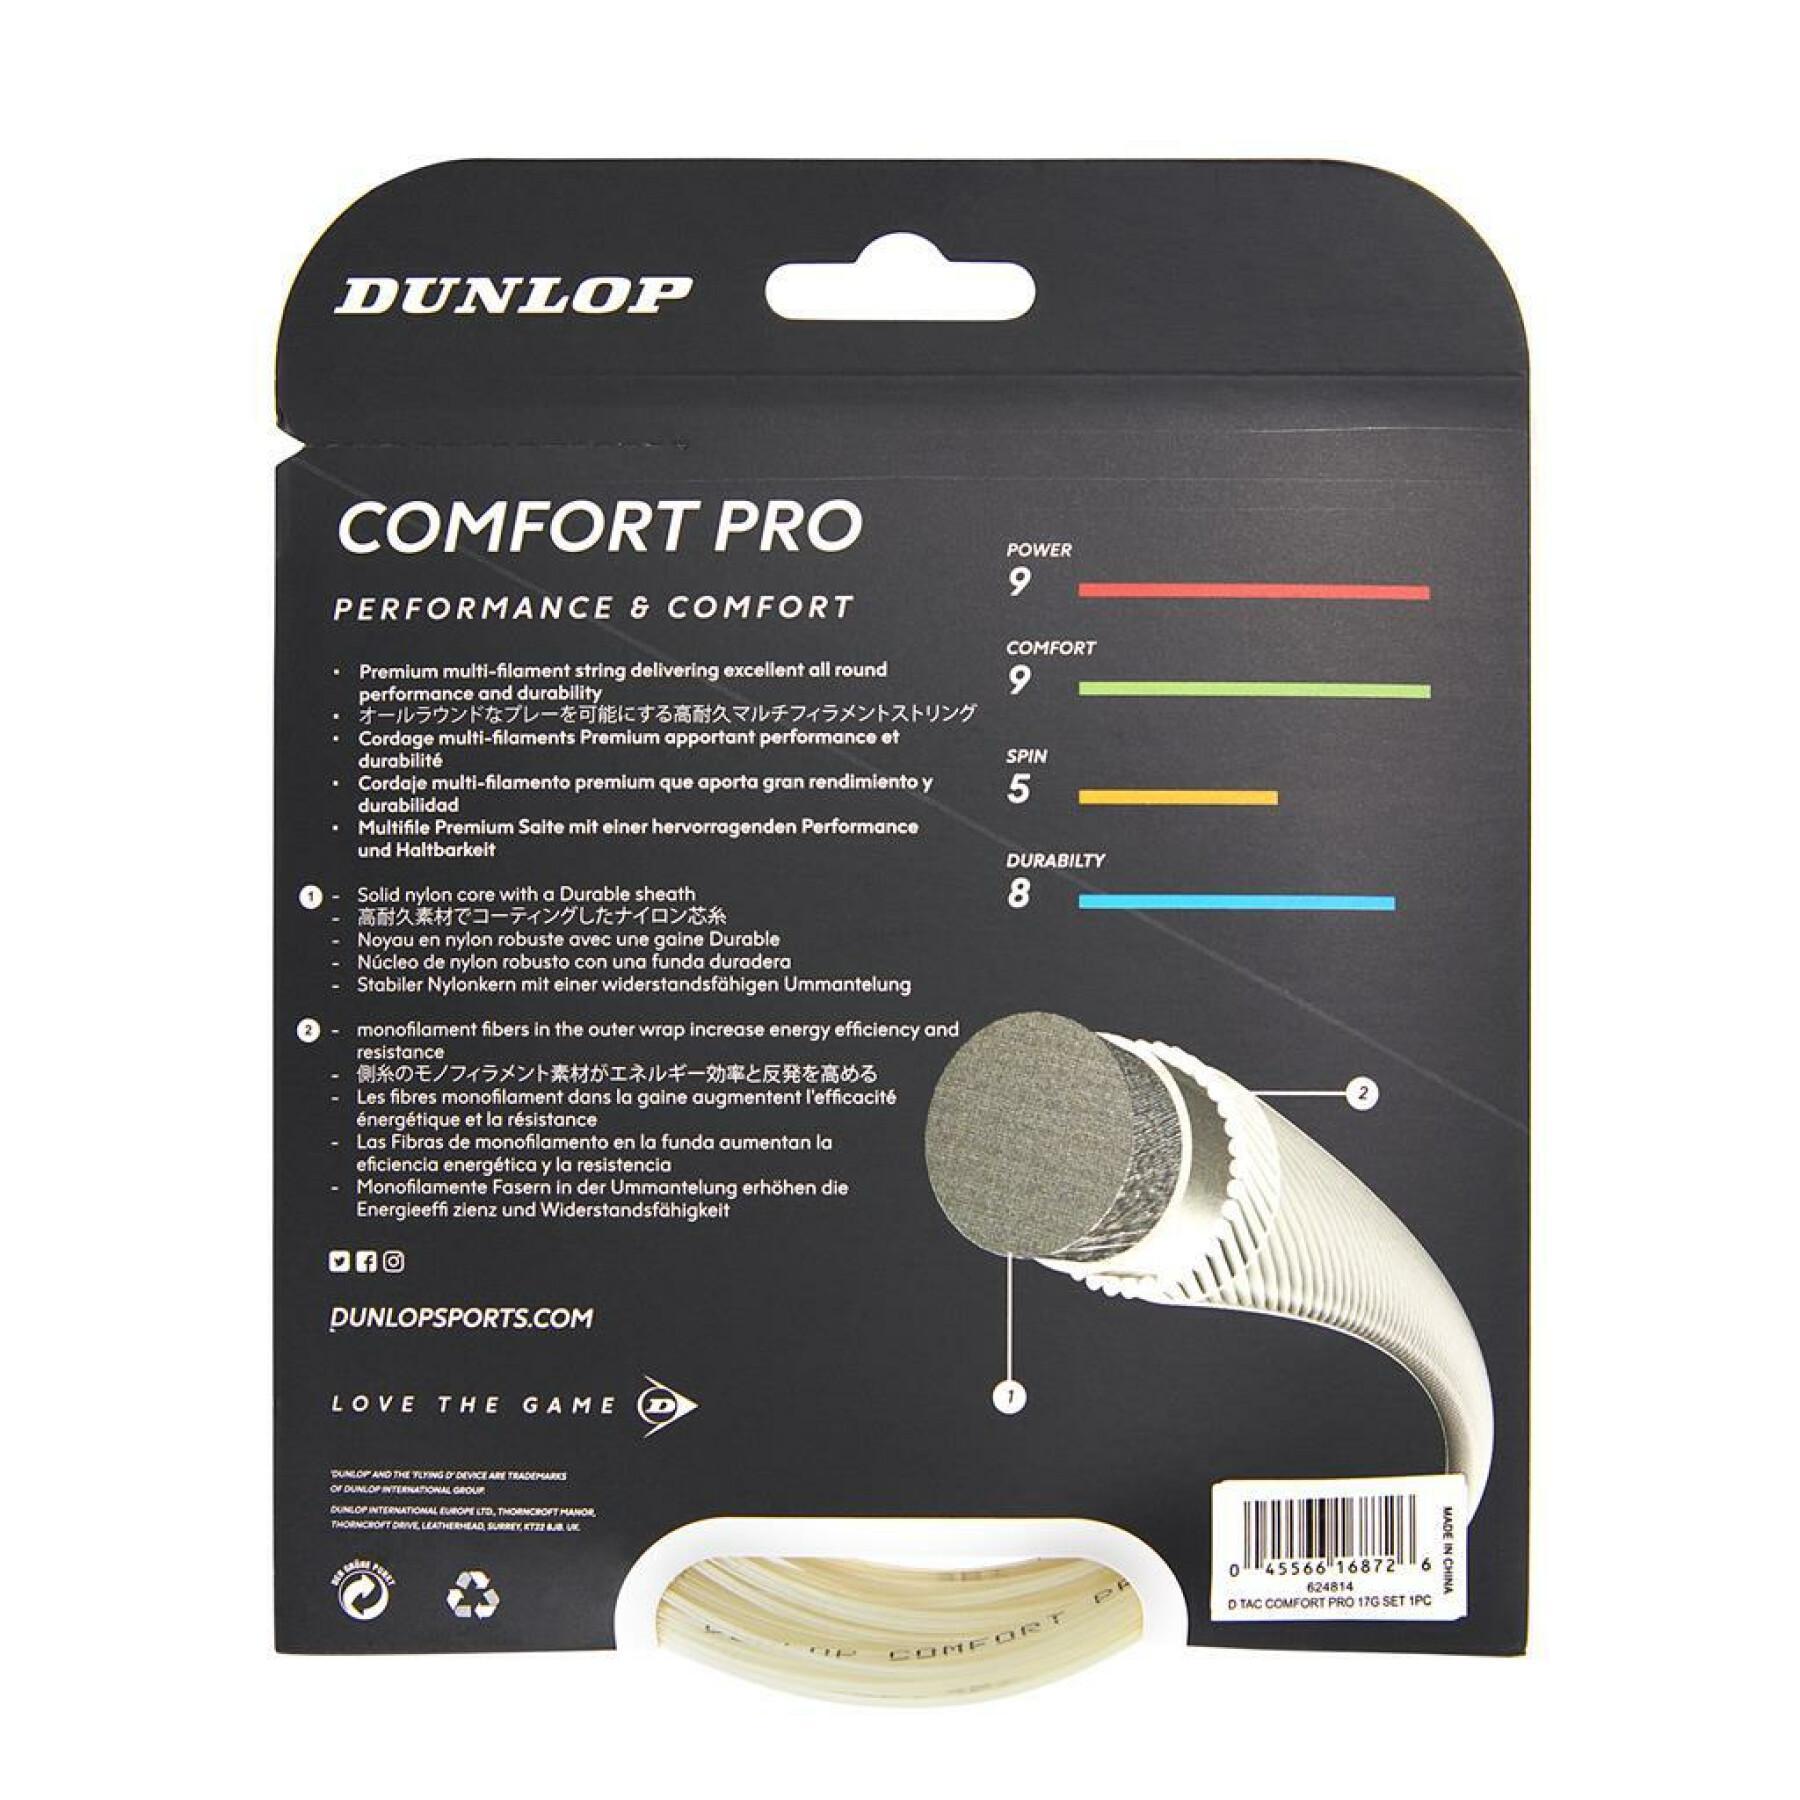 Rep Dunlop comfort pro